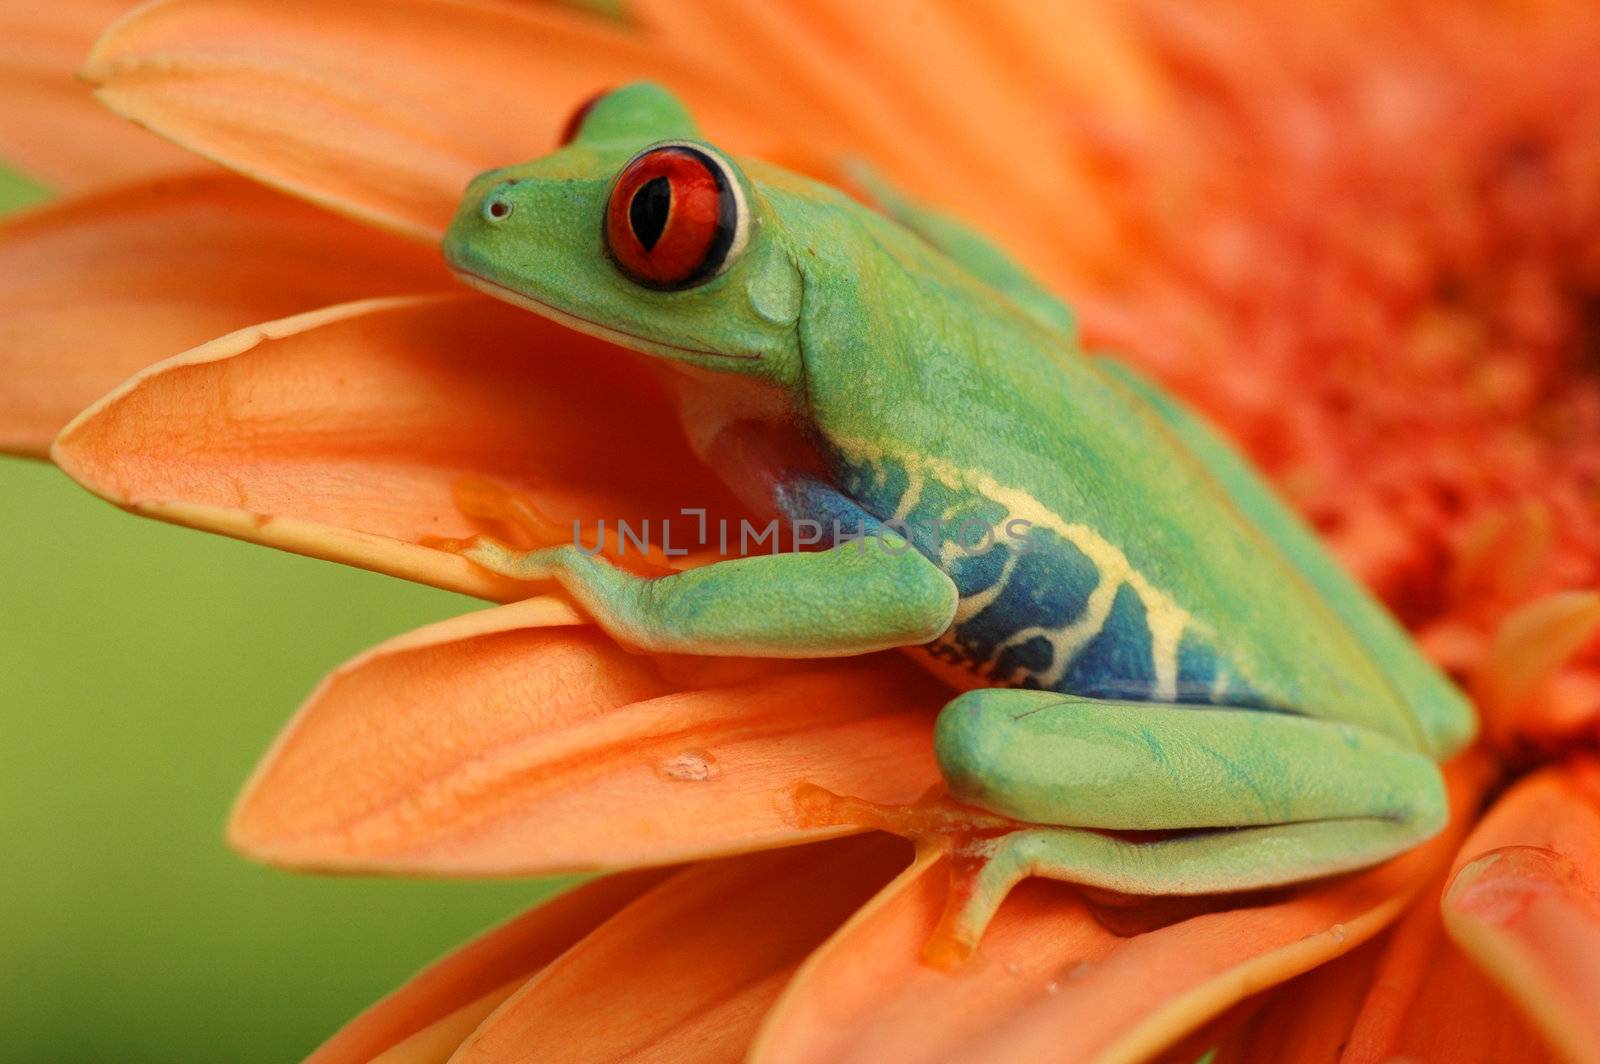 Red-eyed tree frog (Agalychnis callidryas) by donya_nedomam